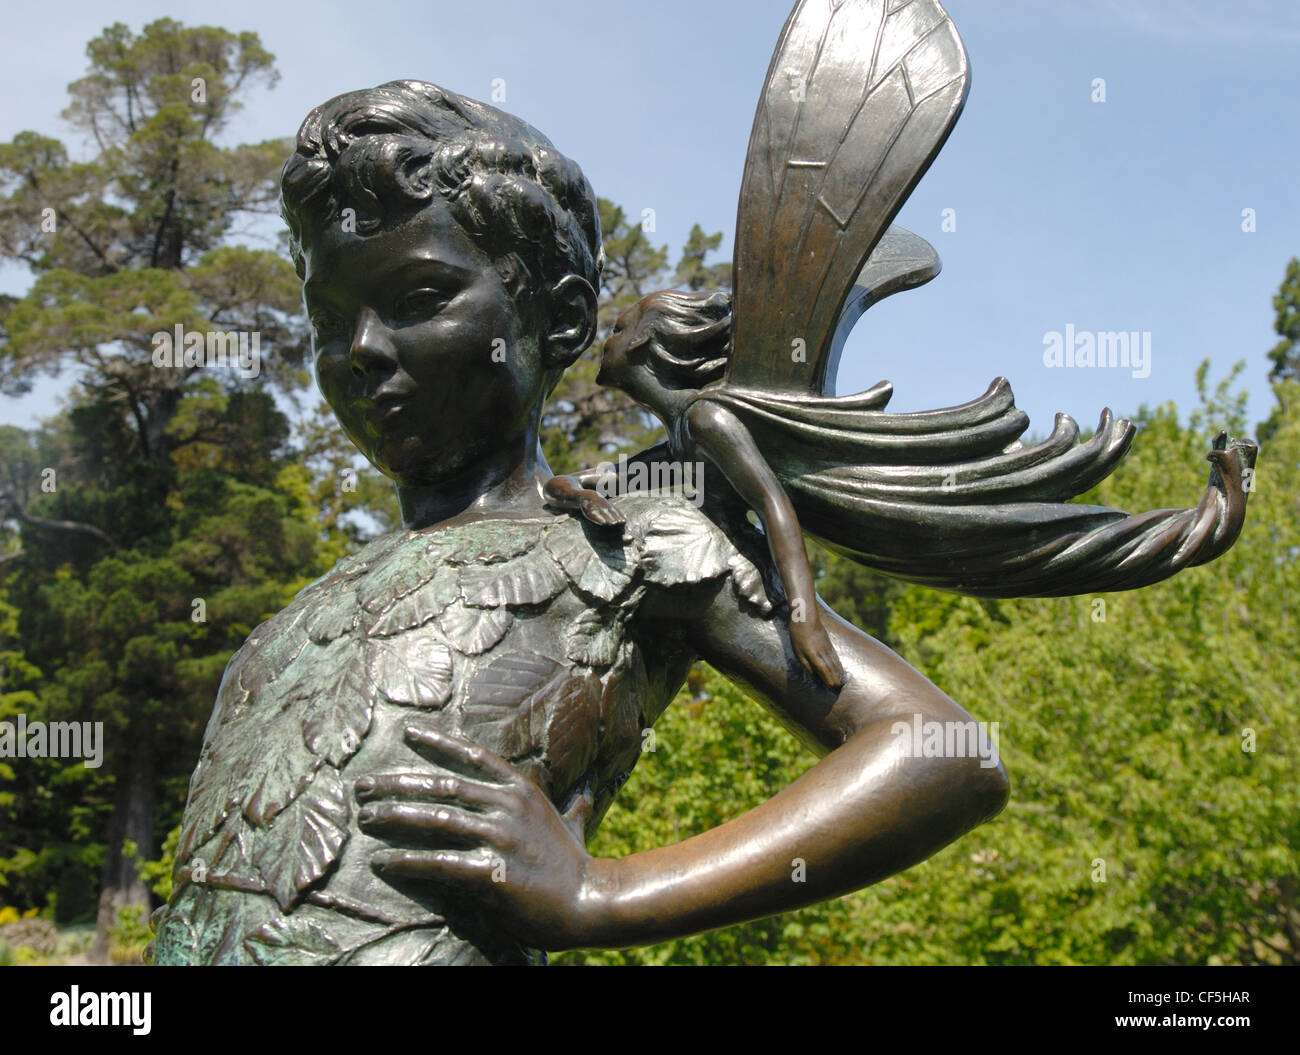 Skulptur von Peter Pan in den botanischen Gärten, Dunedin, Neuseeland Stockfoto